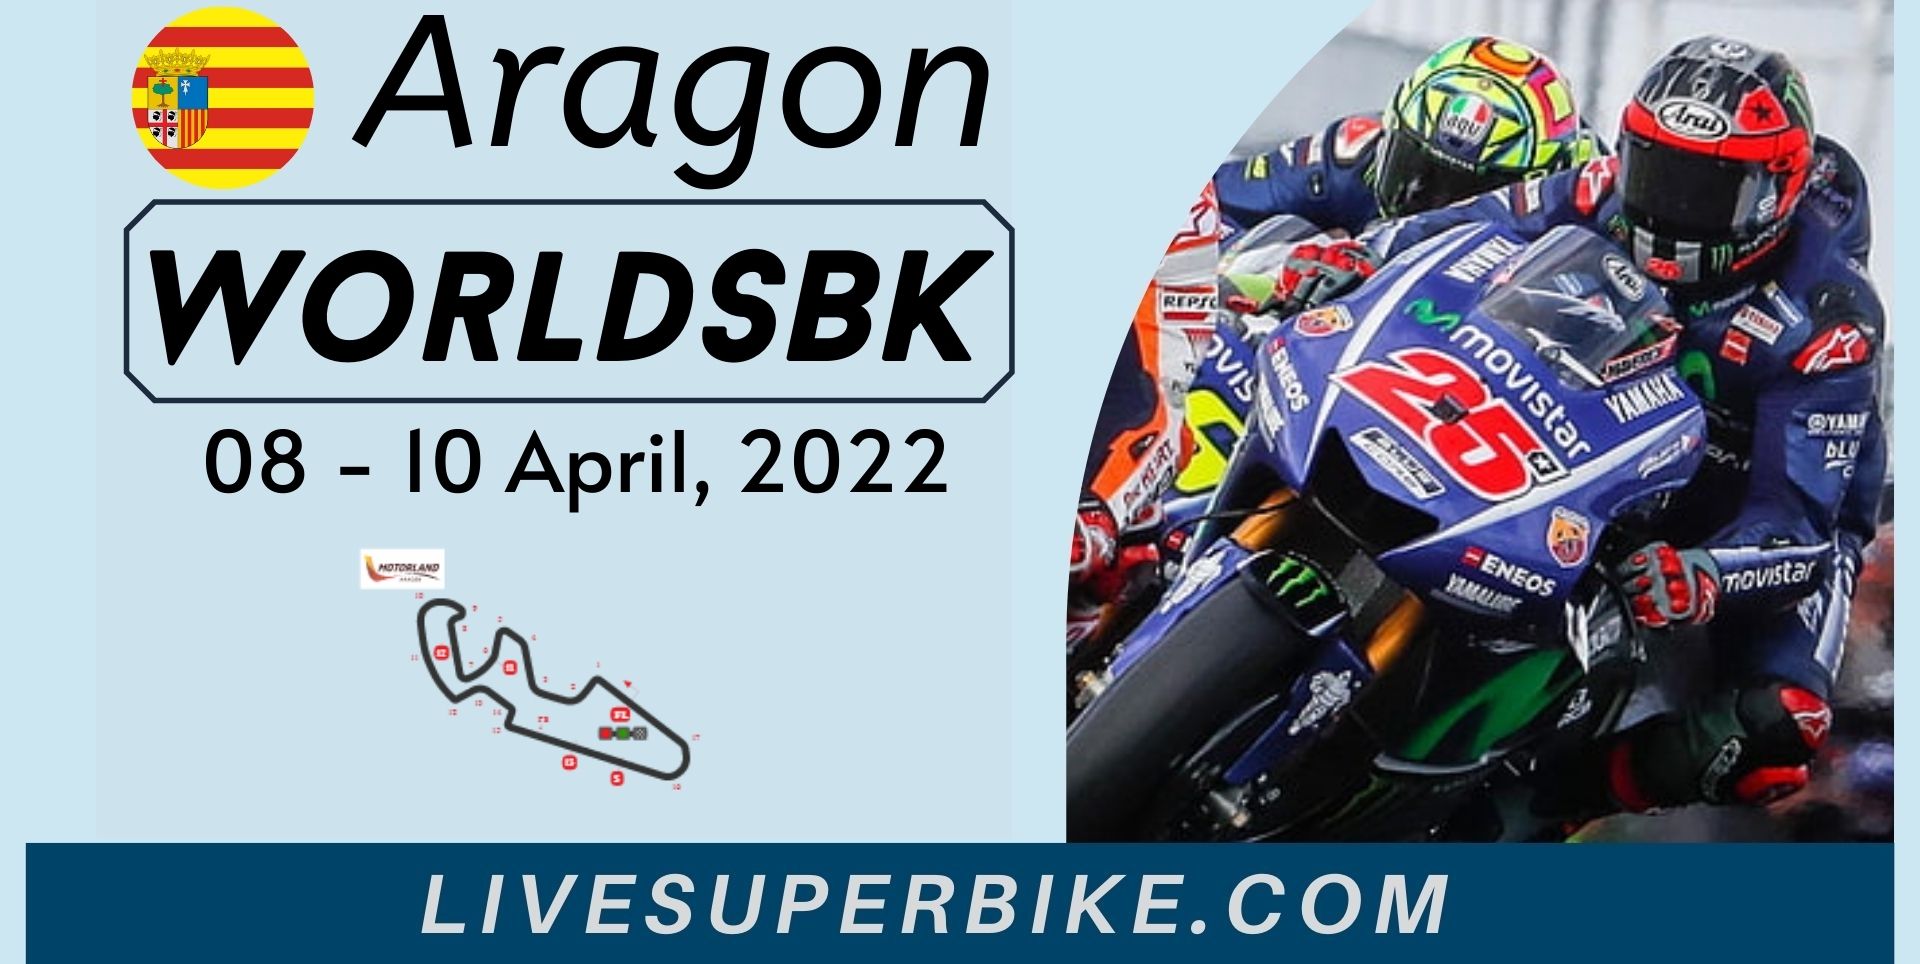 watch-worldsbk-aragon-pirelli-racing-live-broadcast